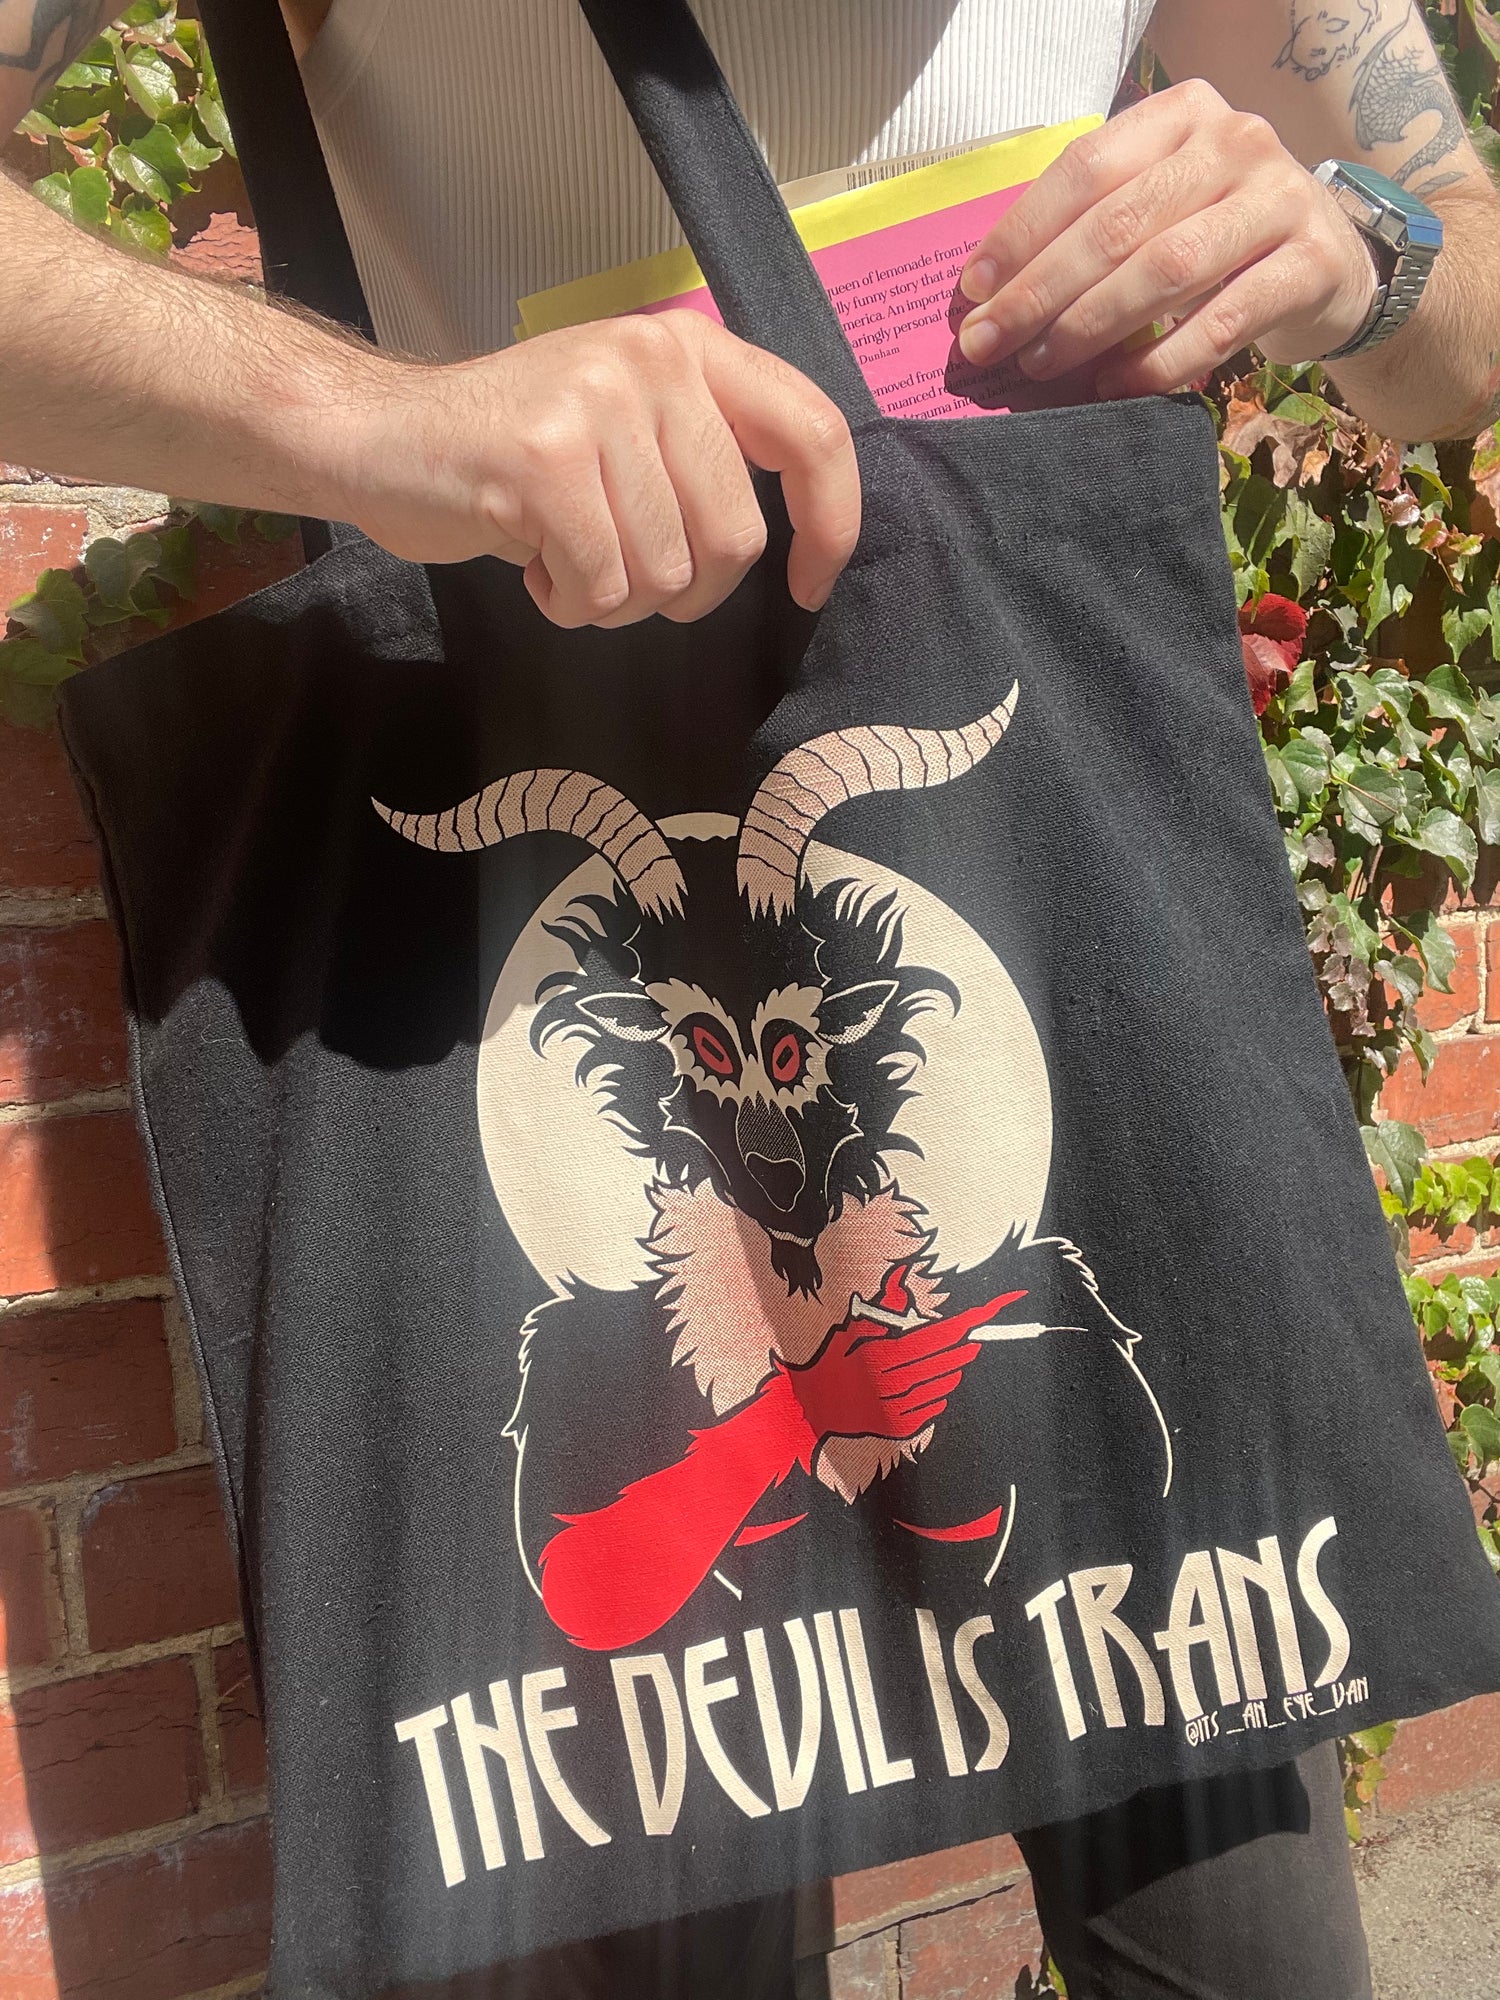 Devil is trans Tote Bag